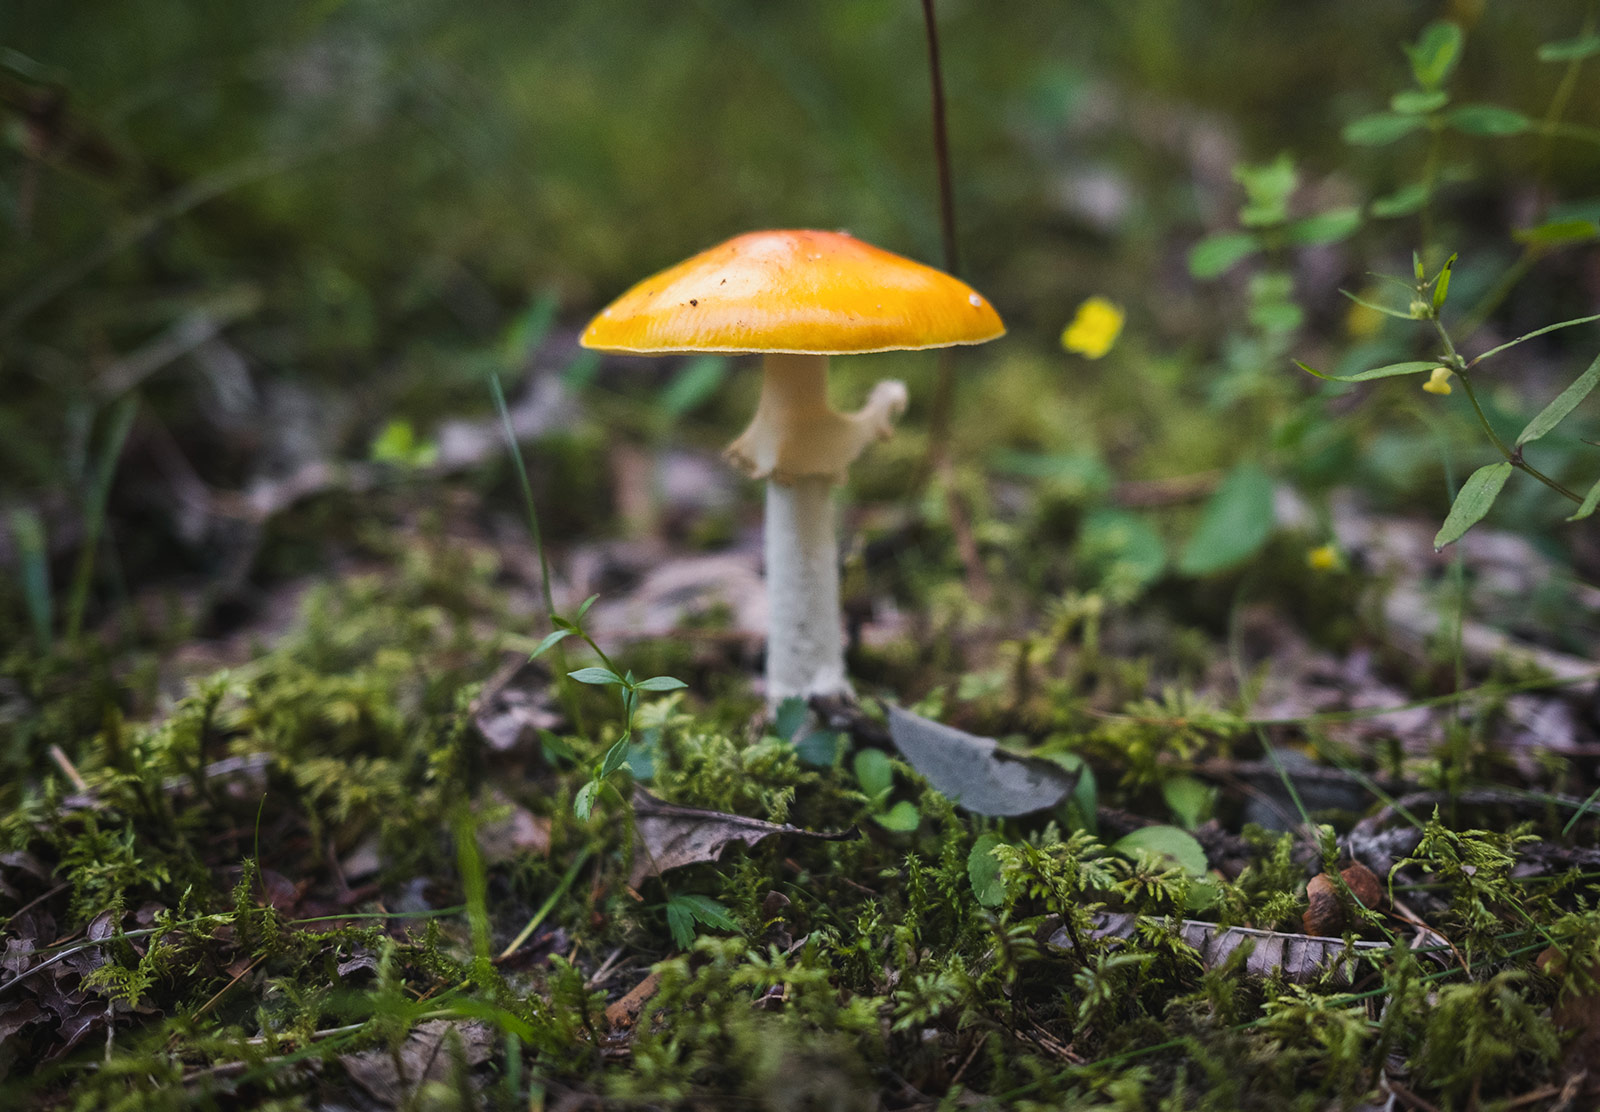 Mushroom growing up through moss